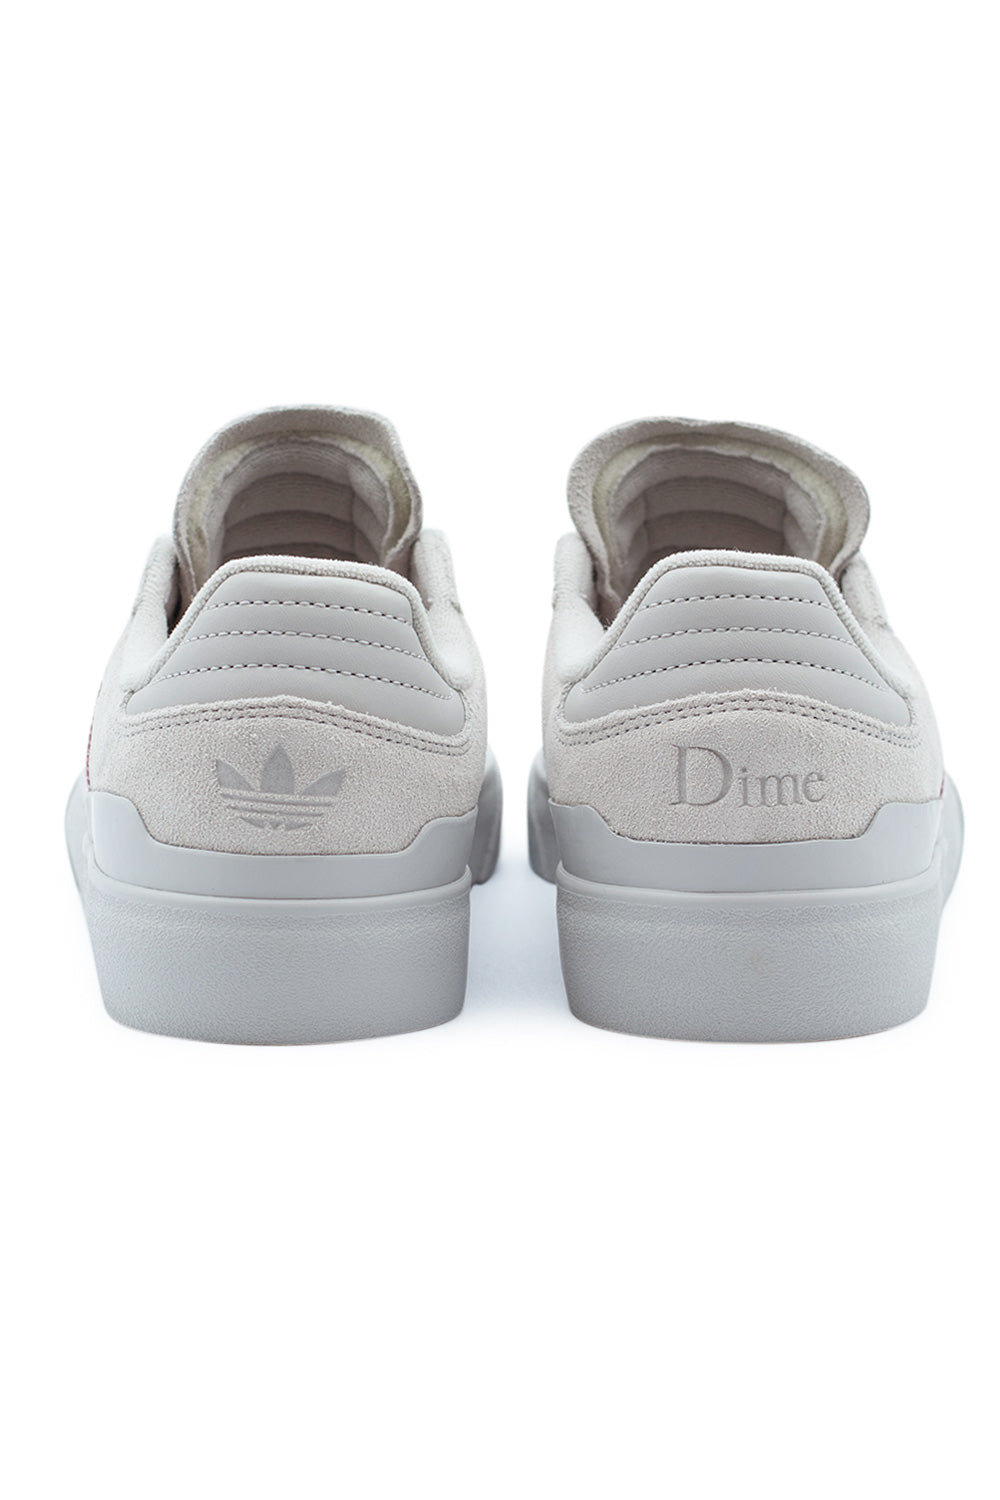 Adidas X Dime Busenitz Vulc II Shoe Clear Granite / Wonder Mauve / Wonder Quartz - BONKERS